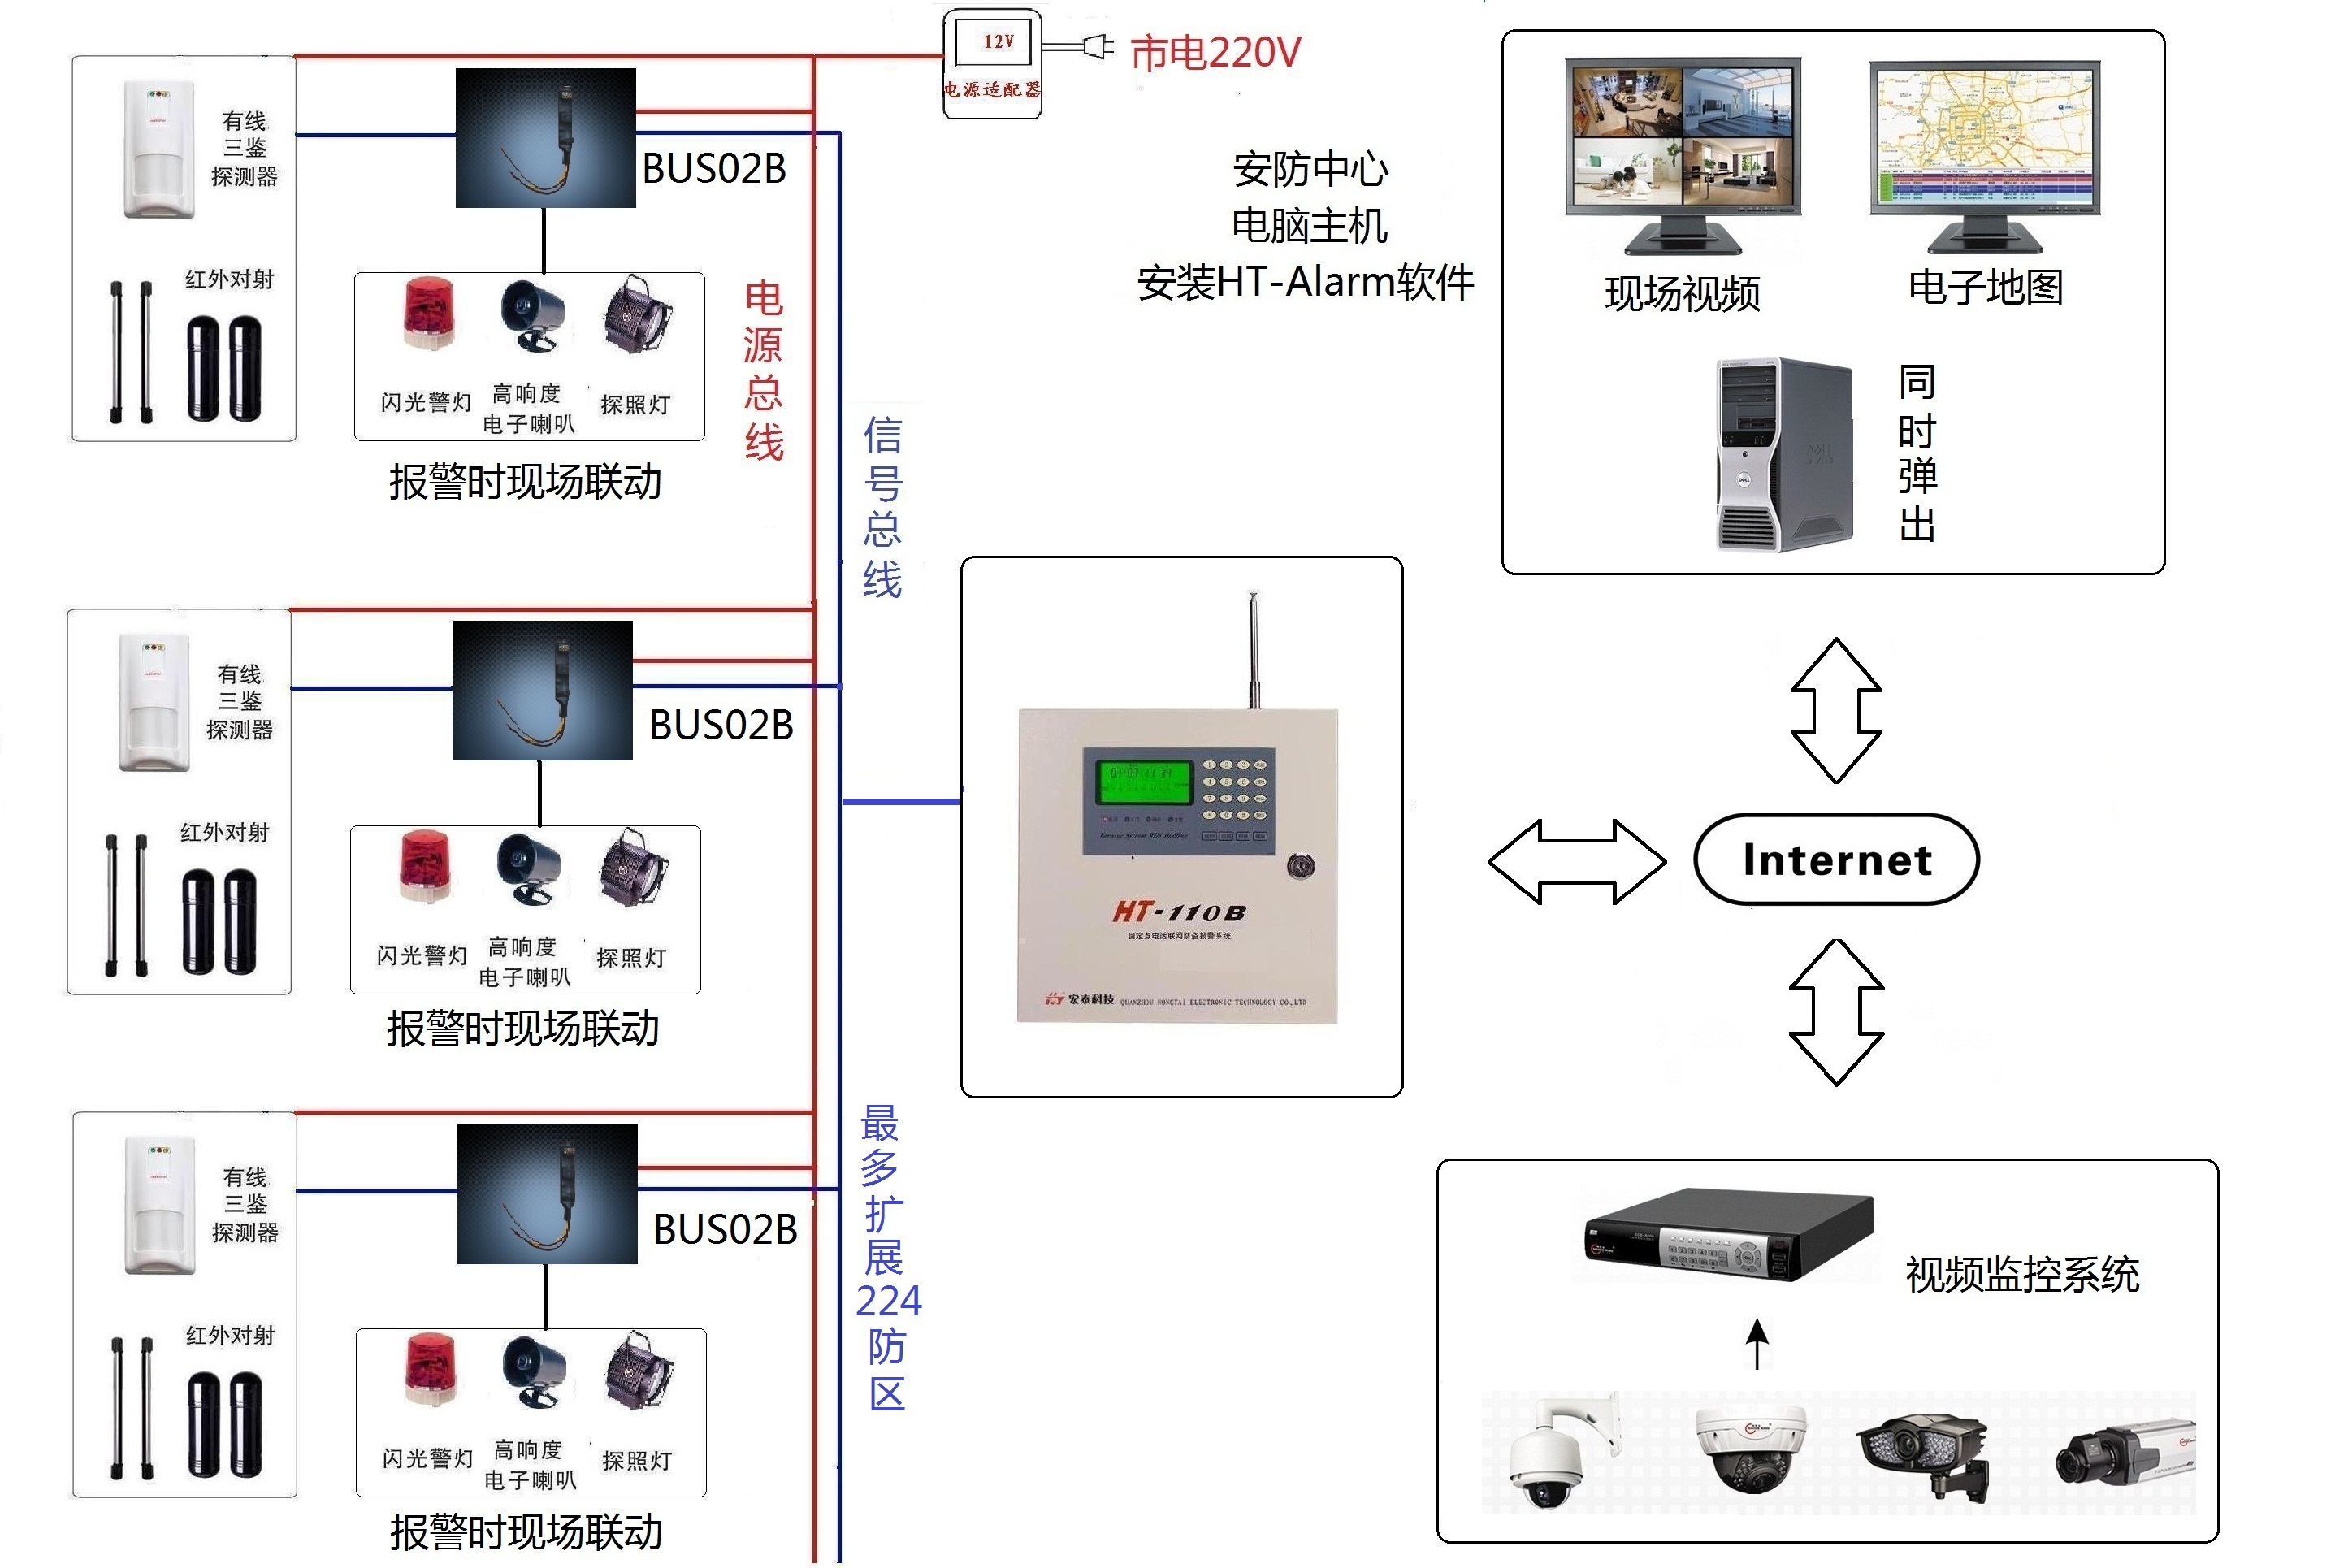 HT-110B(6.1EB+LAN)總線制網絡版報警視頻聯動系統結構圖A.jpg